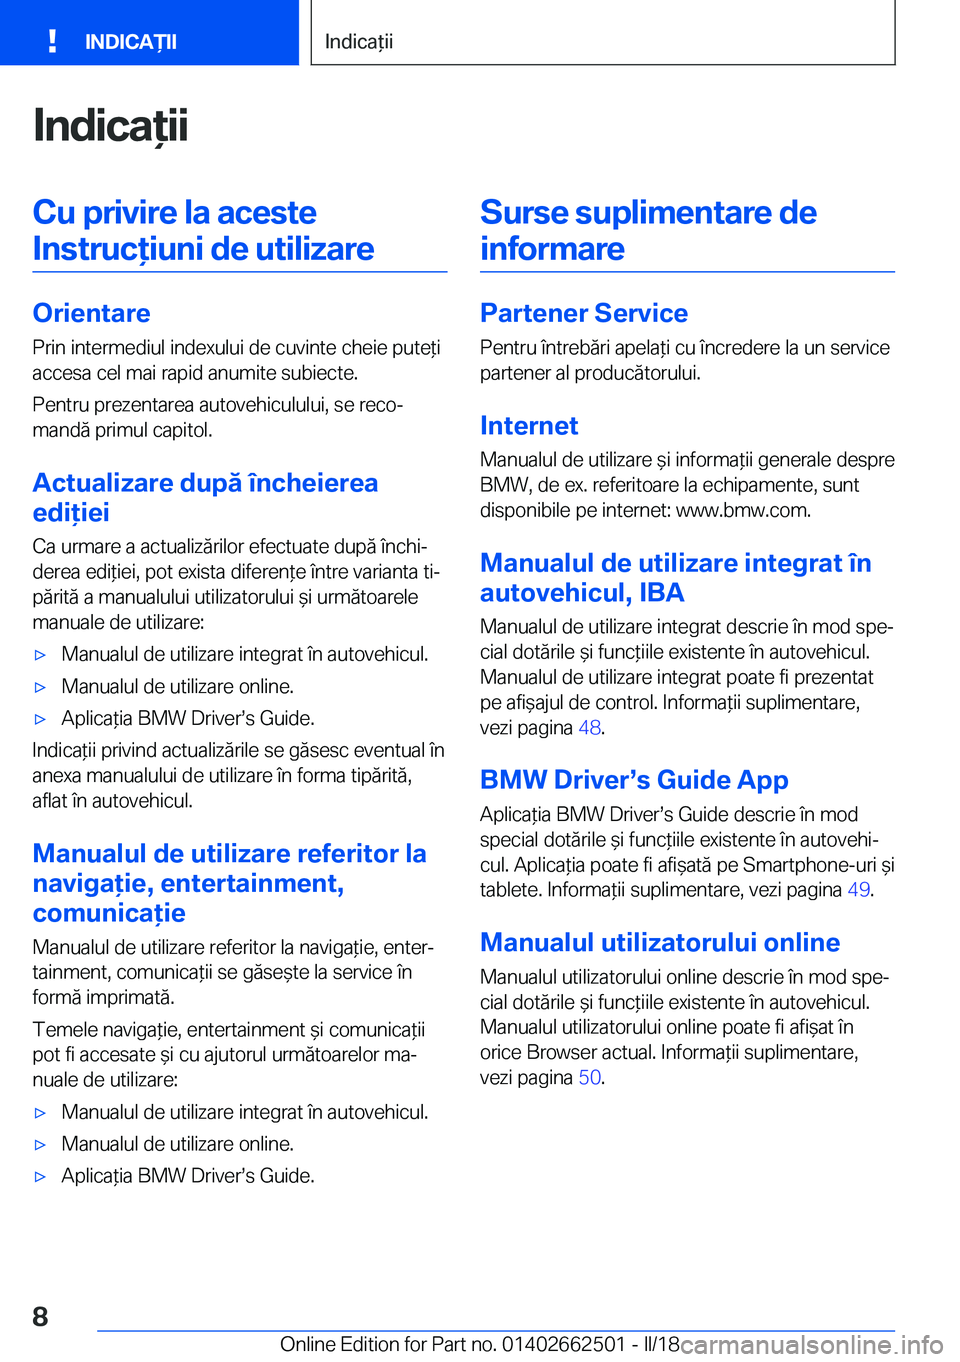 BMW X5 M 2018  Ghiduri De Utilizare (in Romanian) �I�n�d�i�c�a�i�i�C�u��p�r�i�v�i�r�e��l�a��a�c�e�s�t�e�I�n�s�t�r�u�c�i�u�n�i��d�e��u�t�i�l�i�z�a�r�e
�O�r�i�e�n�t�a�r�e �P�r�i�n� �i�n�t�e�r�m�e�d�i�u�l� �i�n�d�e�x�u�l�u�i� �d�e� �c�u�v�i�n�t